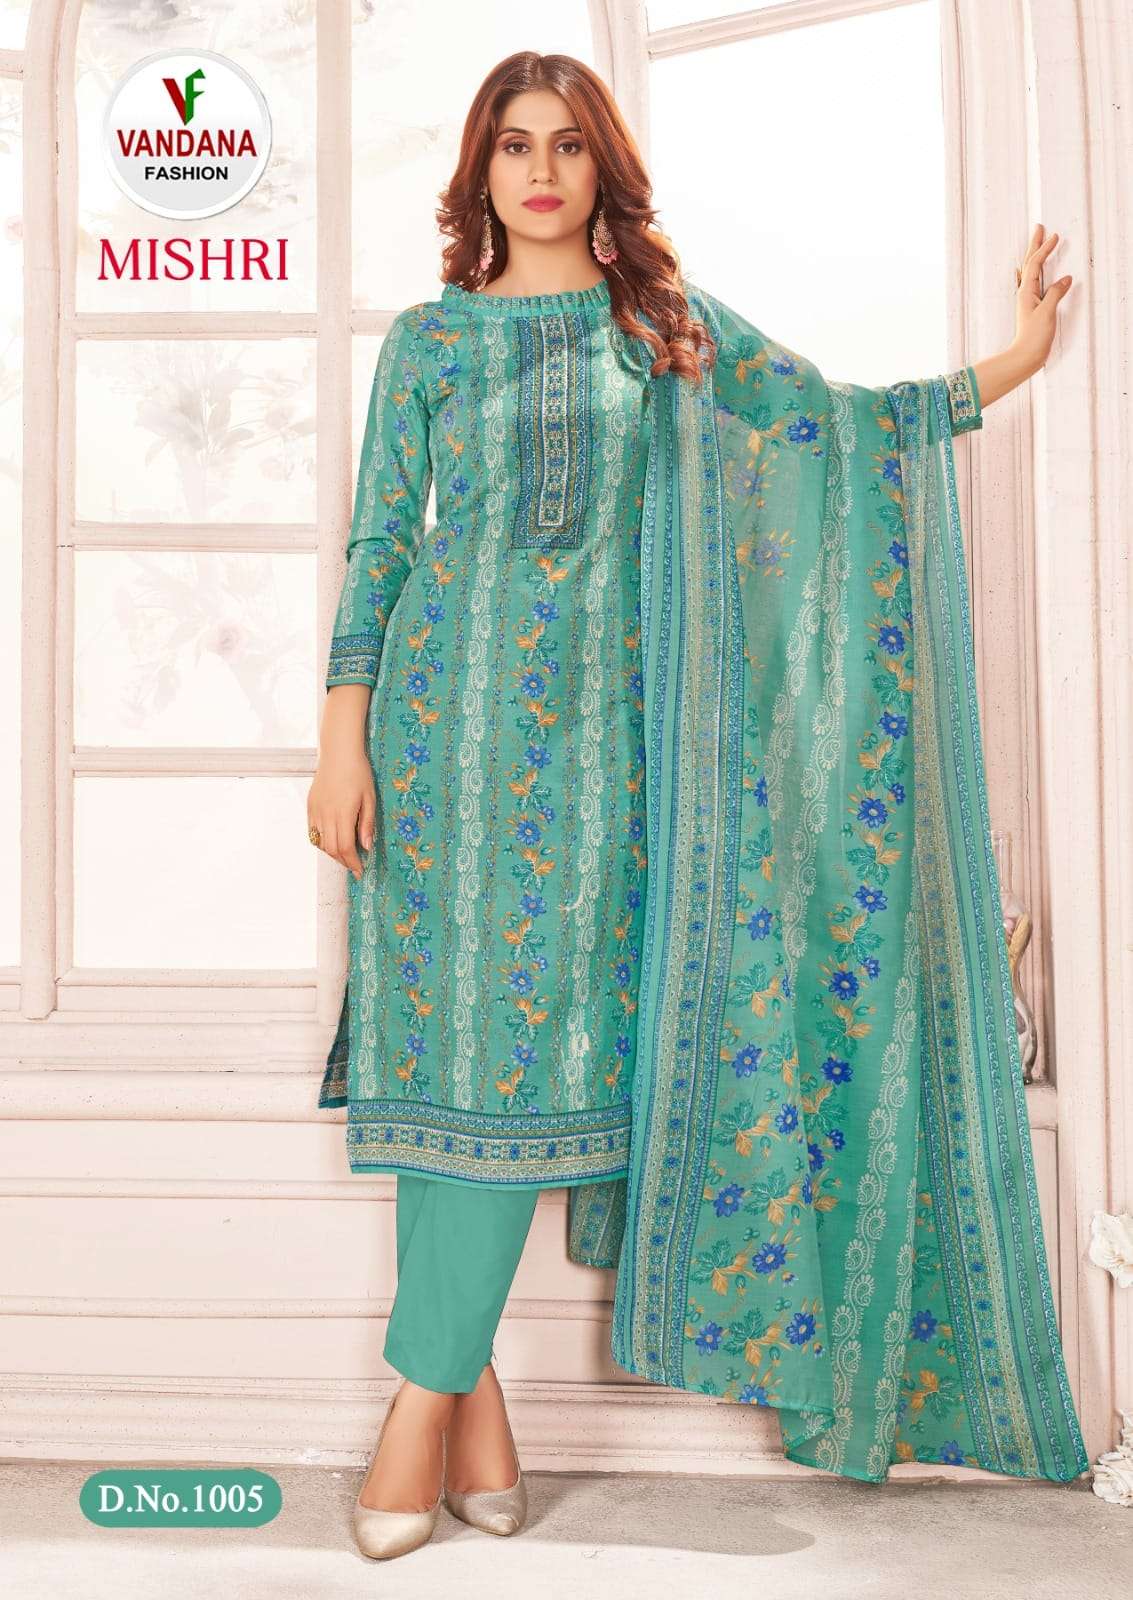 vandana fashion mishri vol-1 1001-1010 series soft cotton designer salwar kameez catalogue online surat 